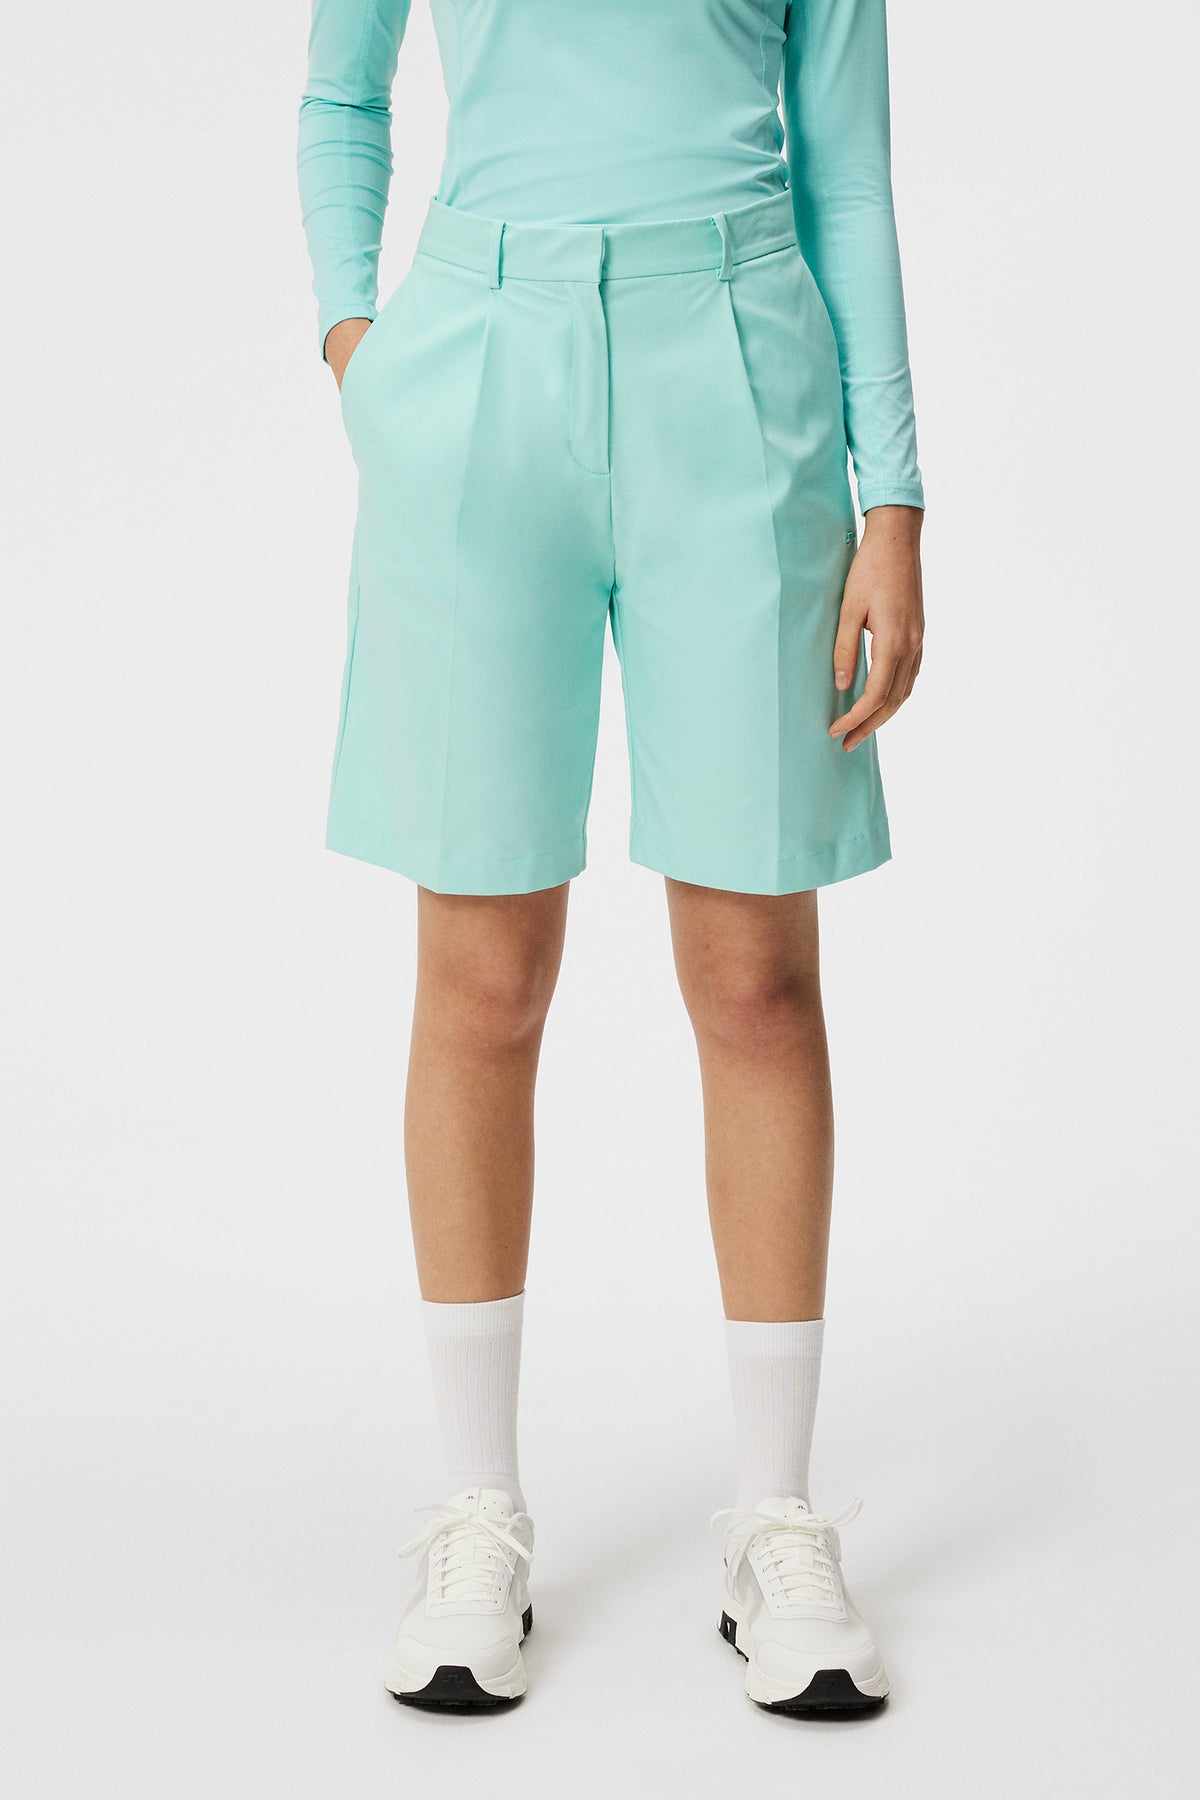 Megh Shorts / Aruba Blue